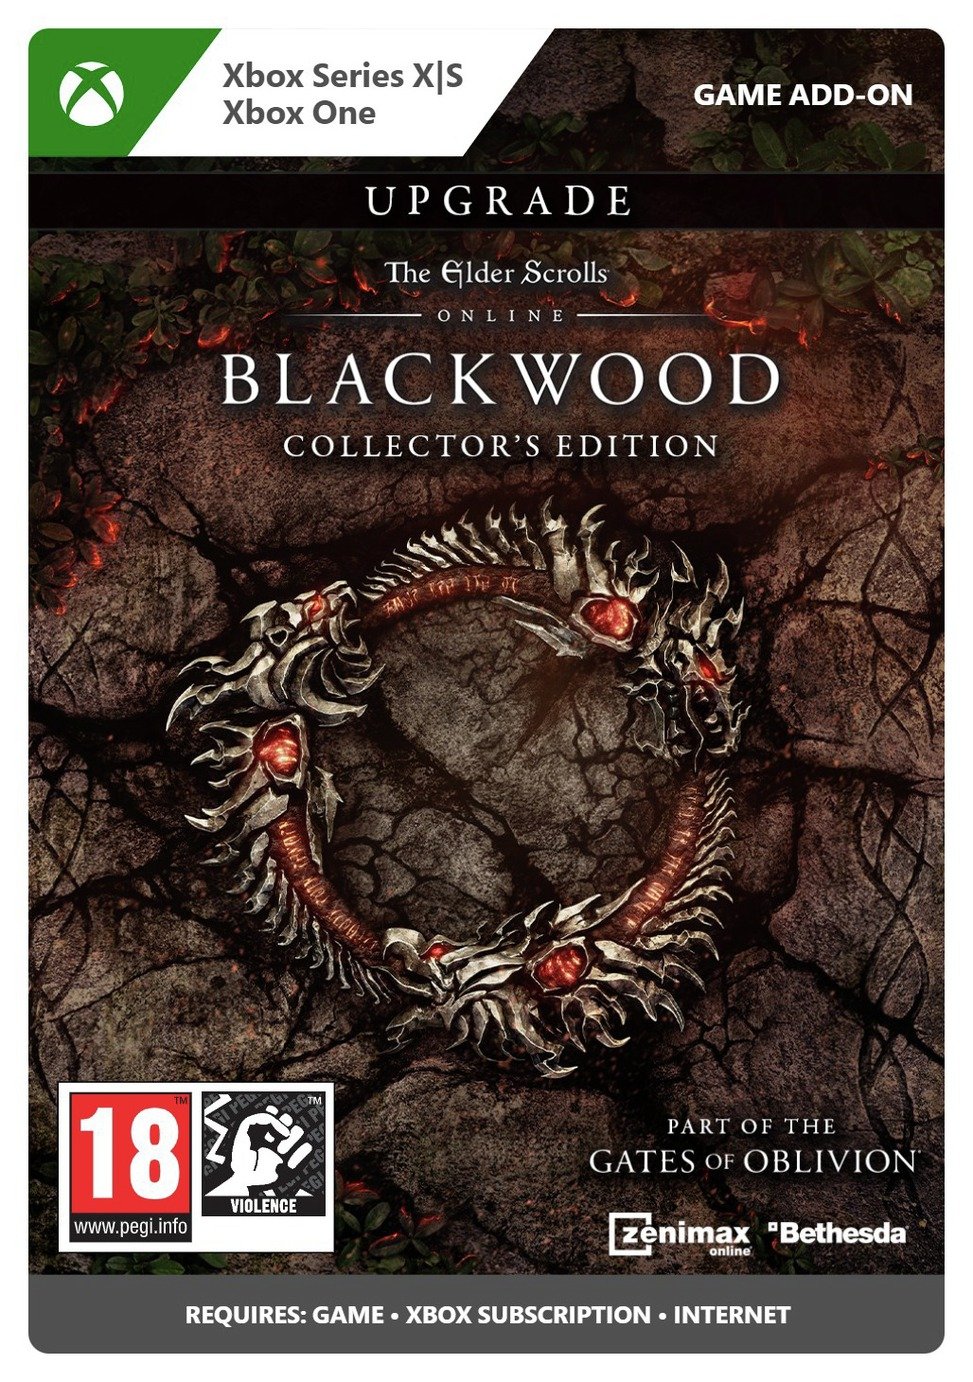 The Elder Scrolls Online: Blackwood CE Upgrade Xbox Add On